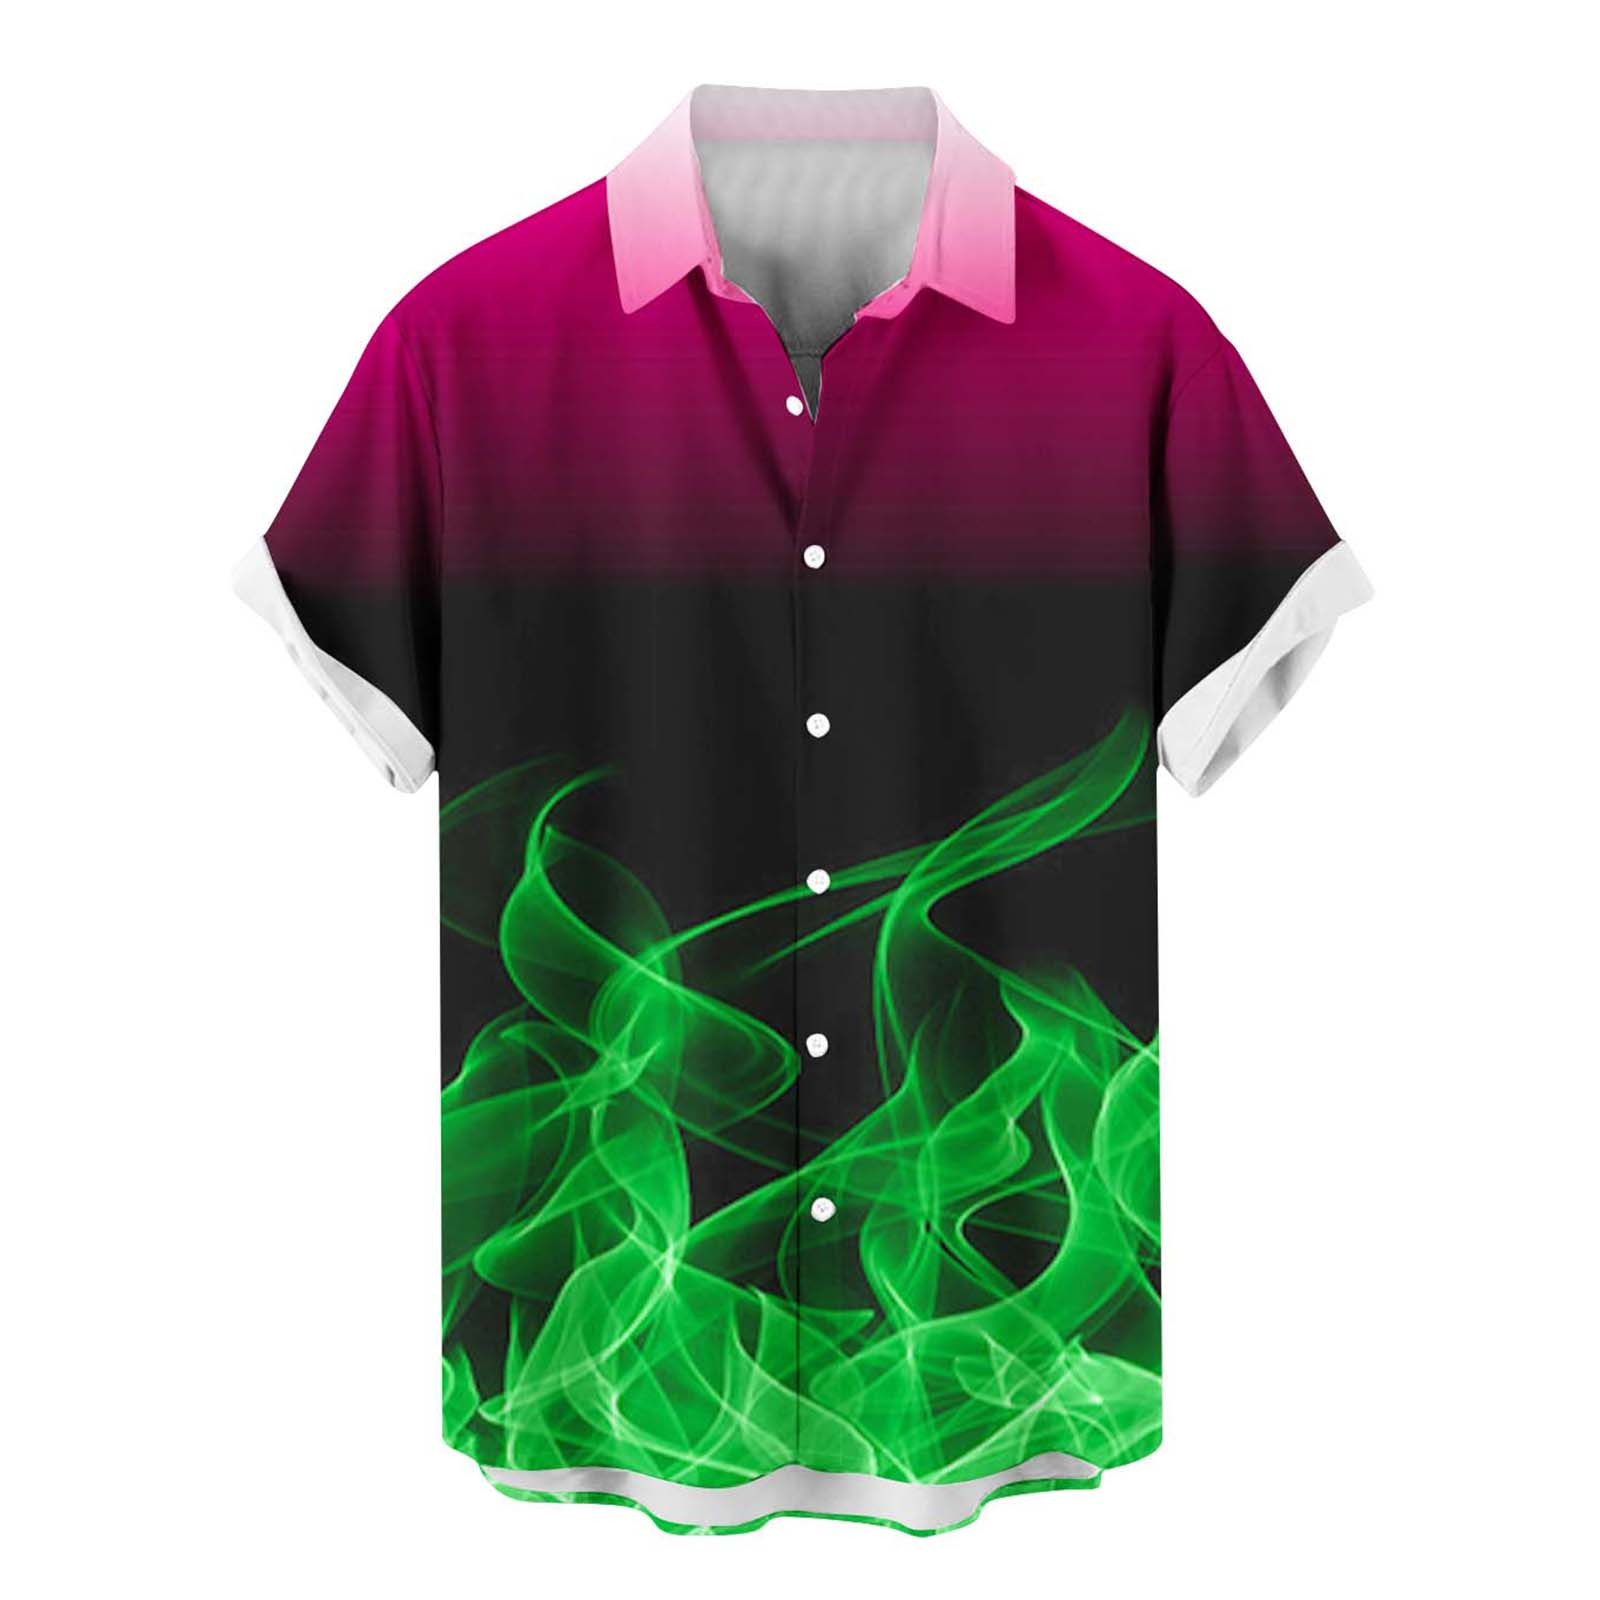 QIPOPIQ Men's Short Sleeve Turndown Collar Shirts Men 3D Fire Pattern Hawaiian Shirt Summer Fashion Printed Have Pockets Button Shirt Tops Tees Shirt Gift for Father & Him 2023 Deals Green XL - image 1 of 4